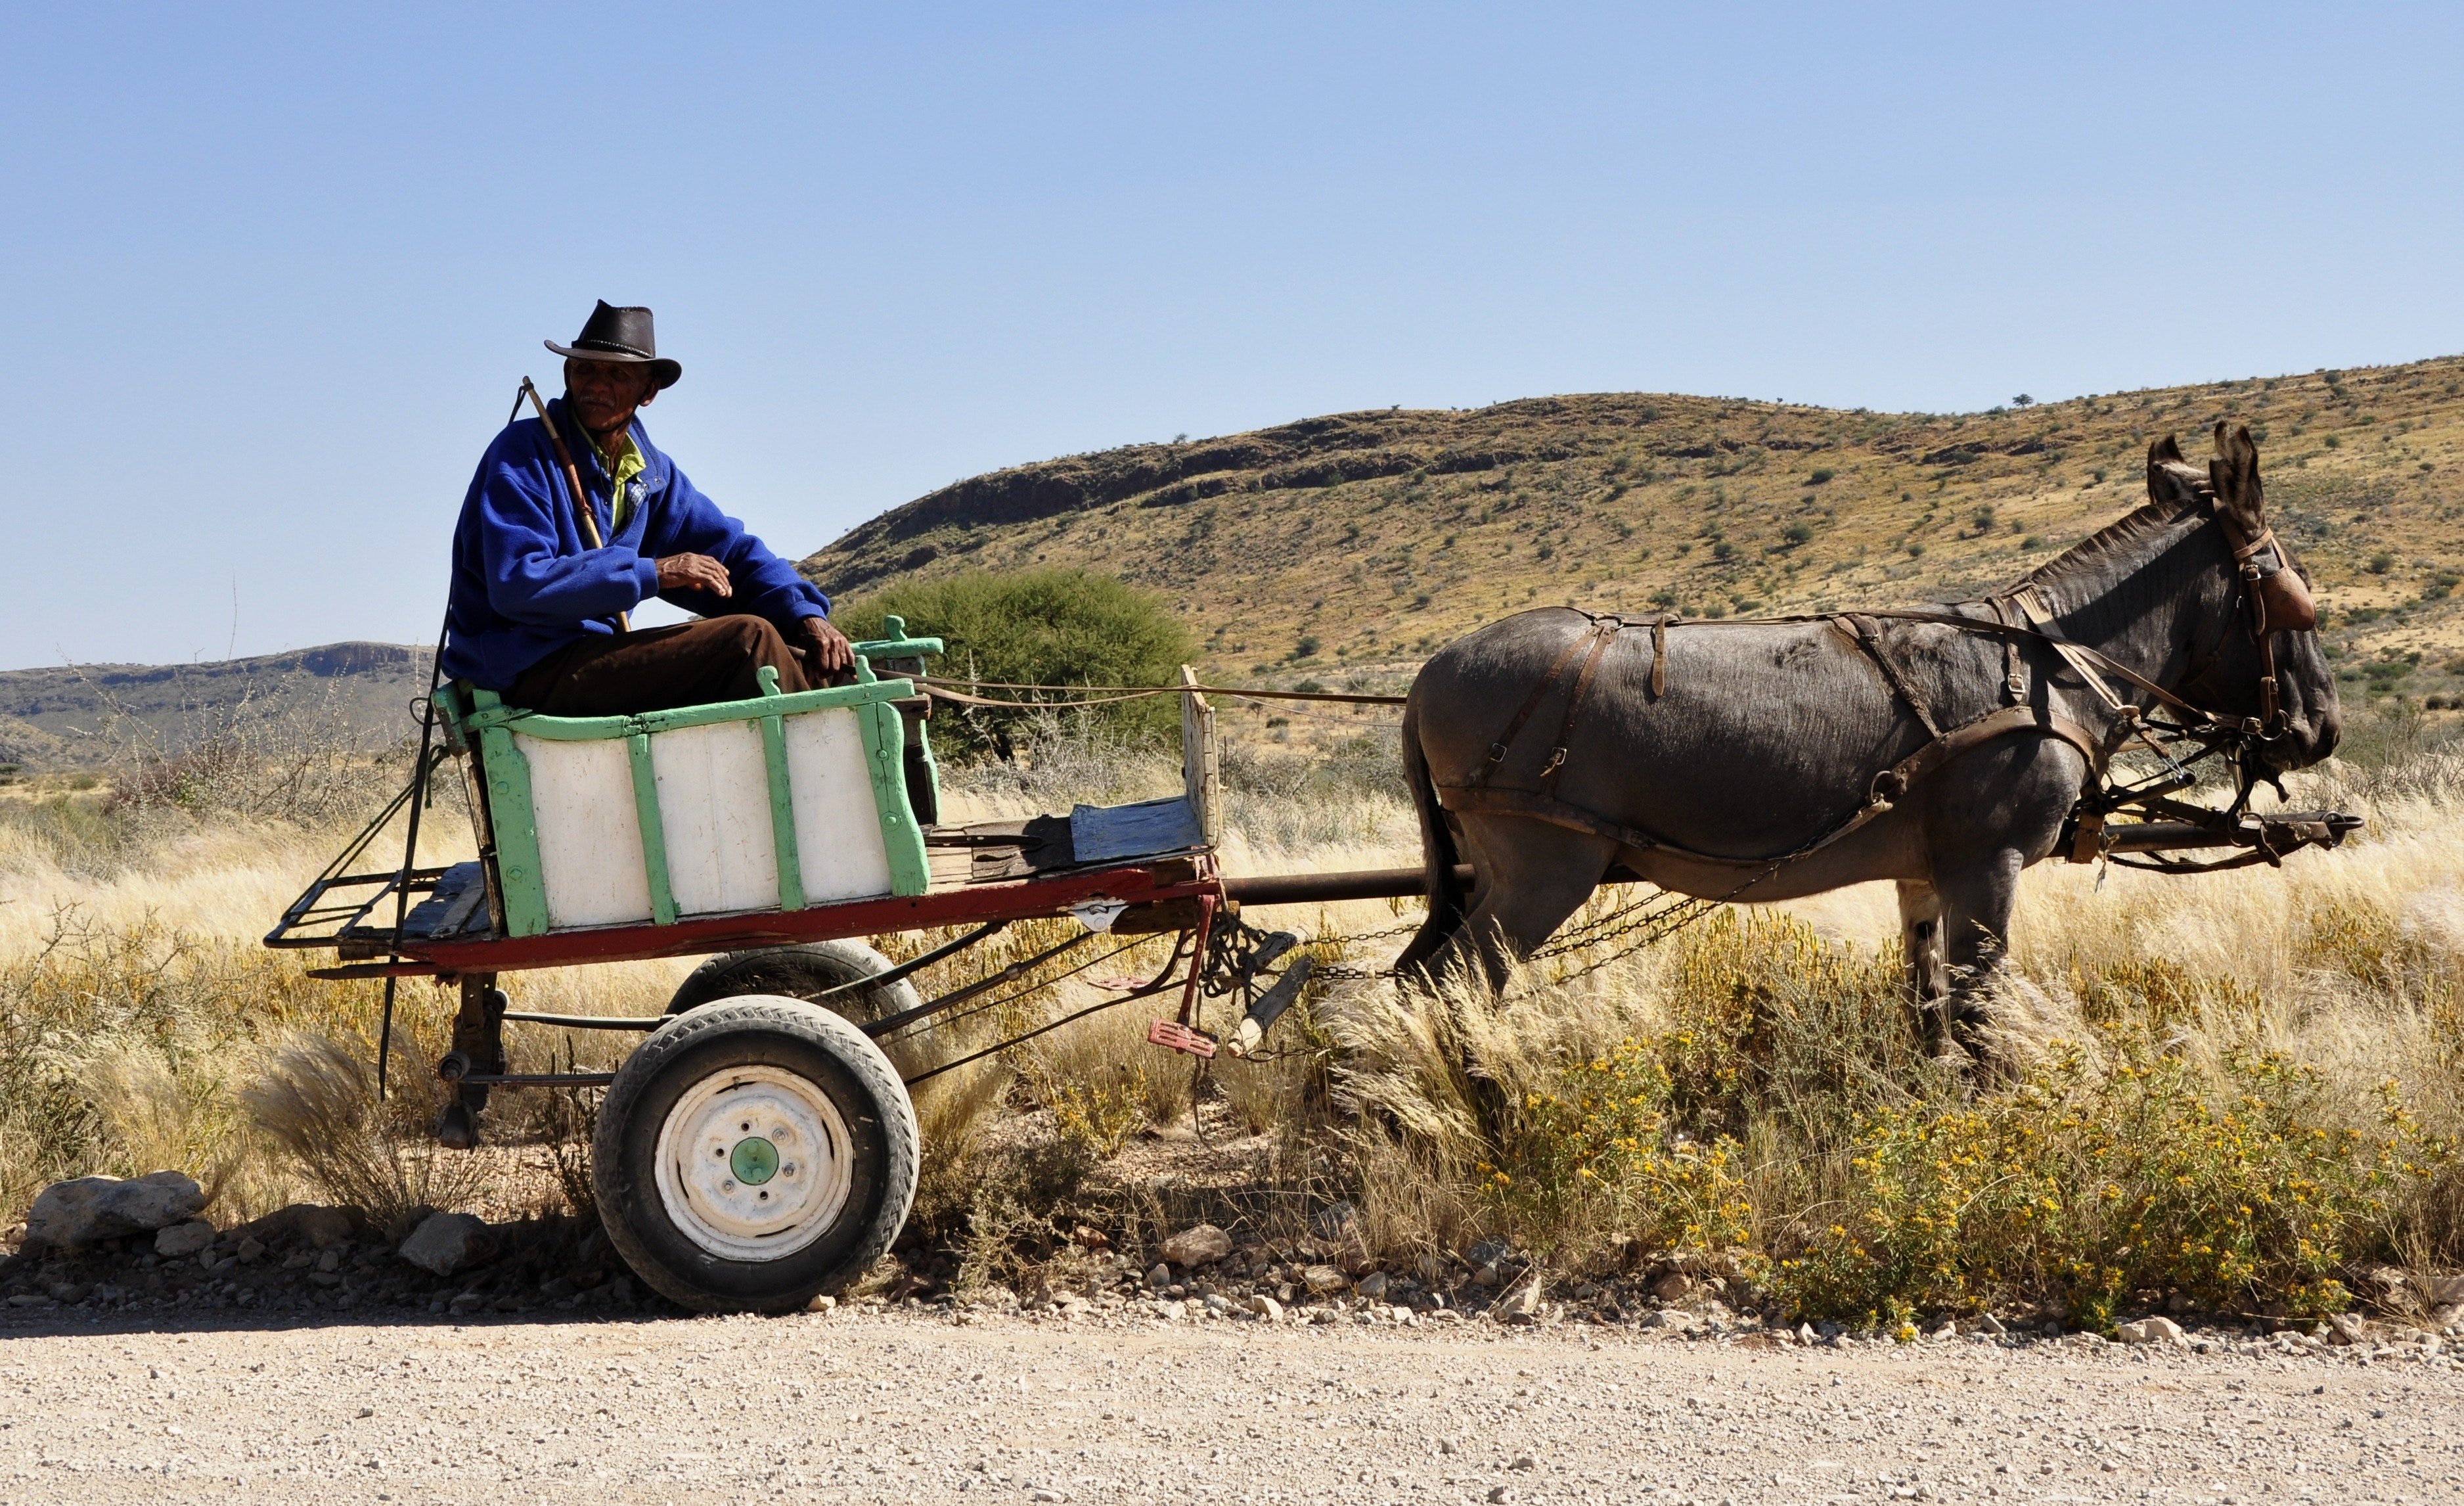 Man on Donkey Cart| Photo: Pexels